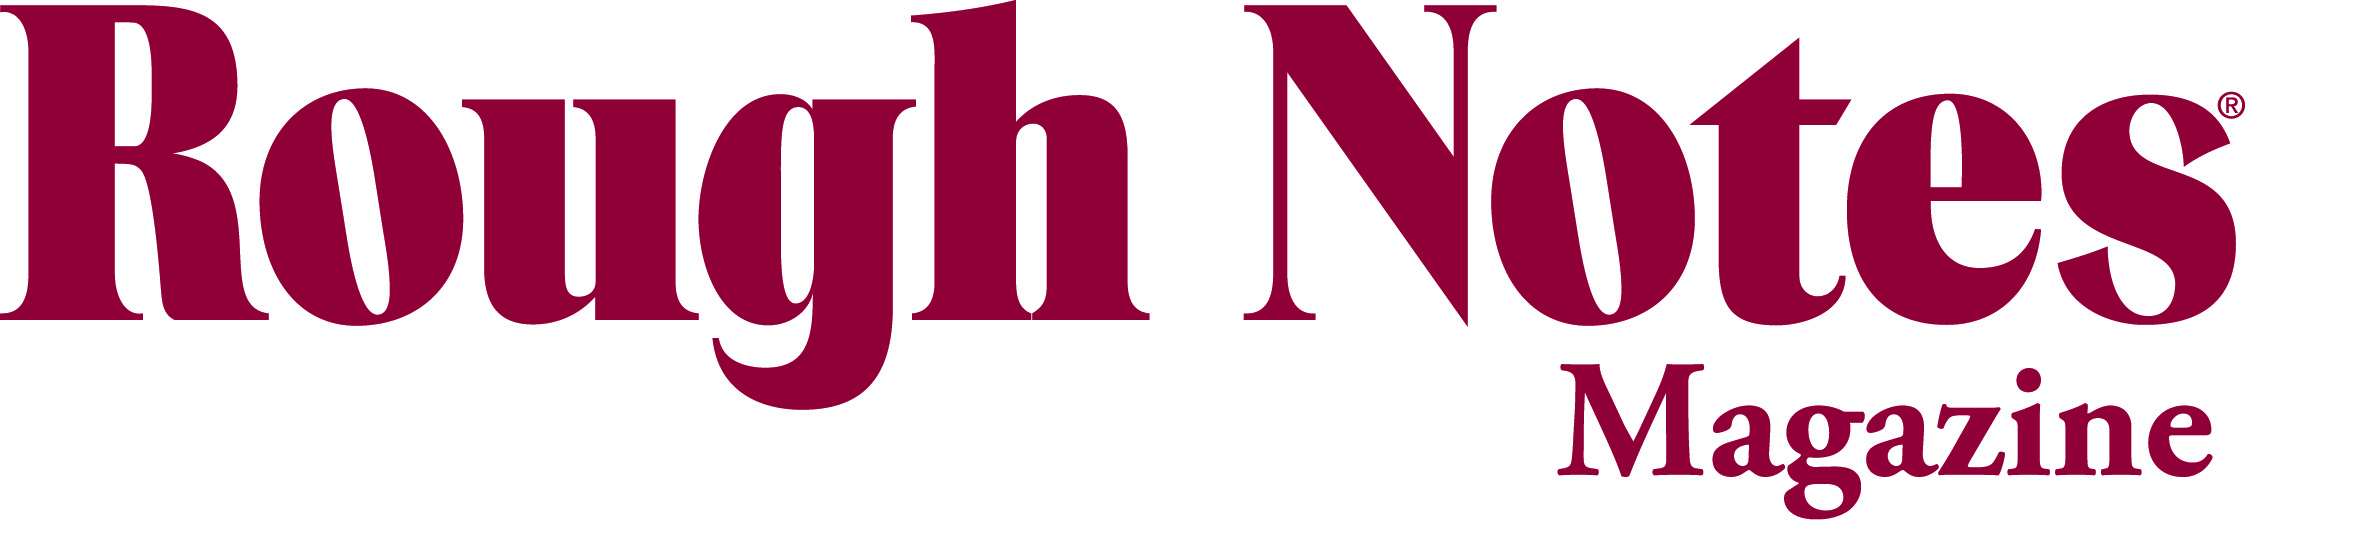 Rough Notes Magazine logo